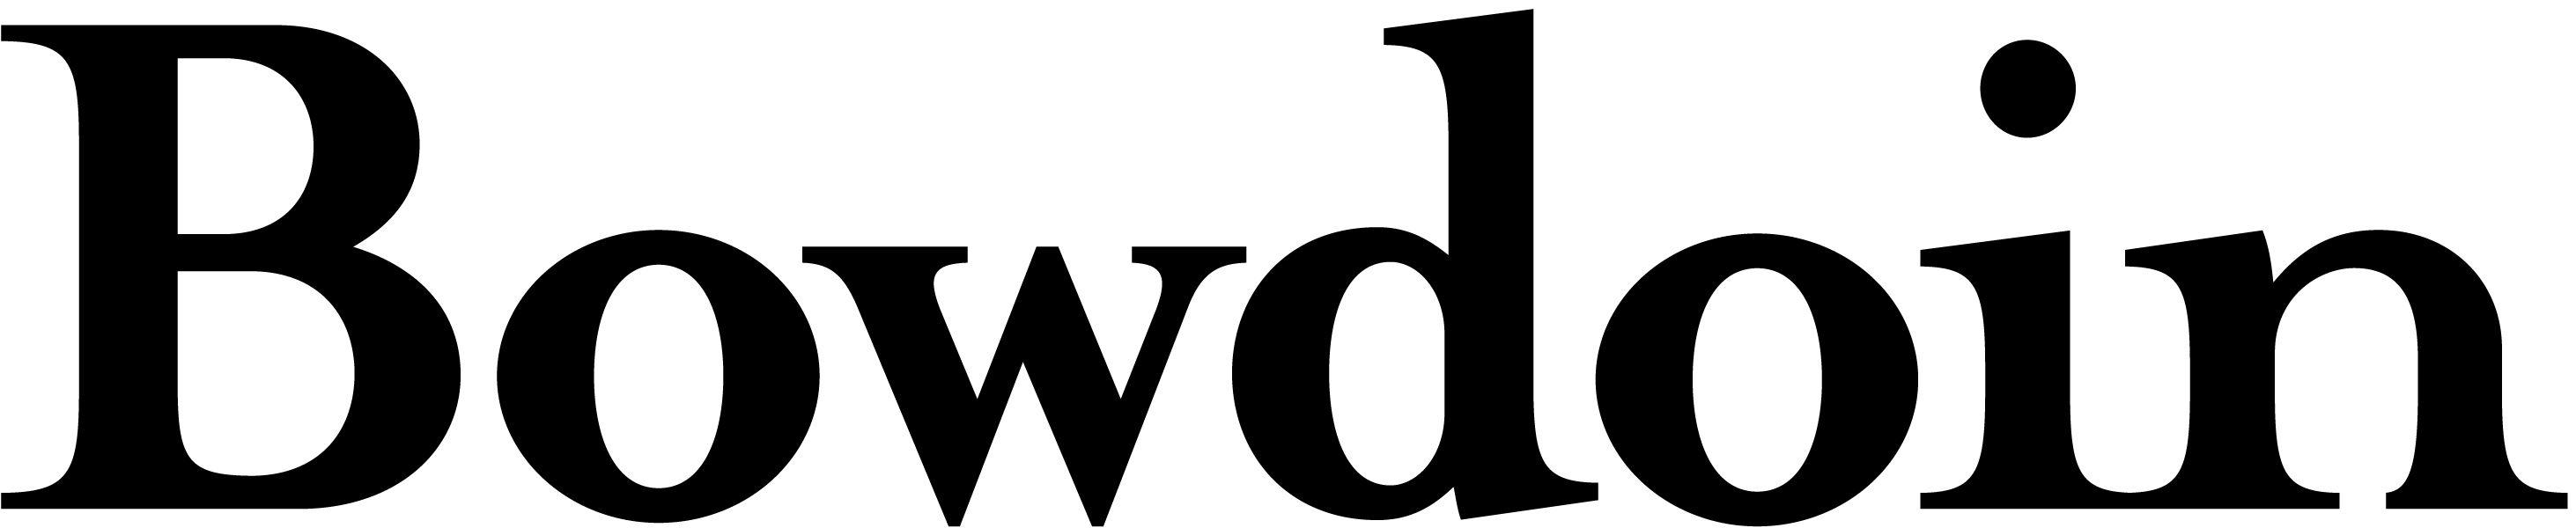 Bowdoin Logo - Bowdoin College Logo Vector Icon Template Clipart Free Download